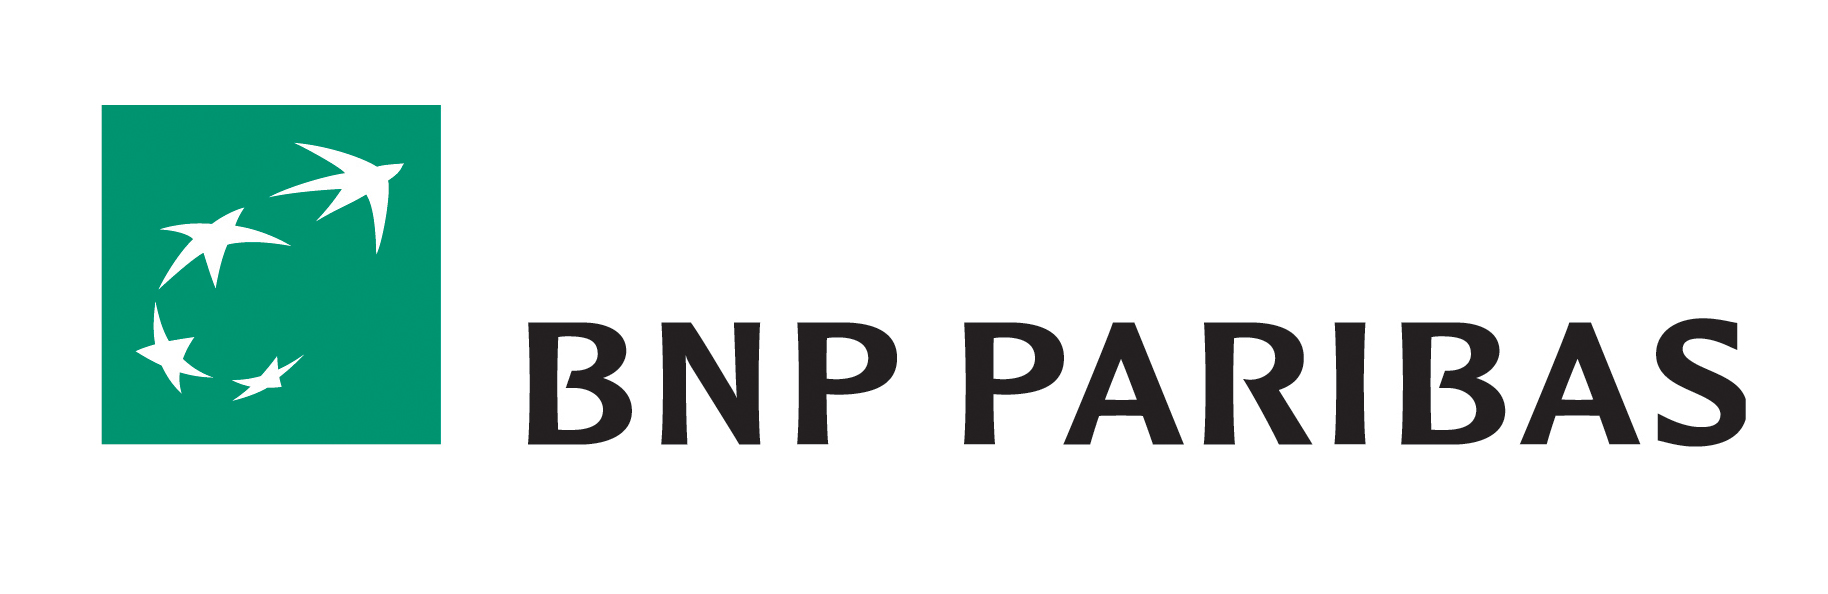 bnp-paribas-jpg